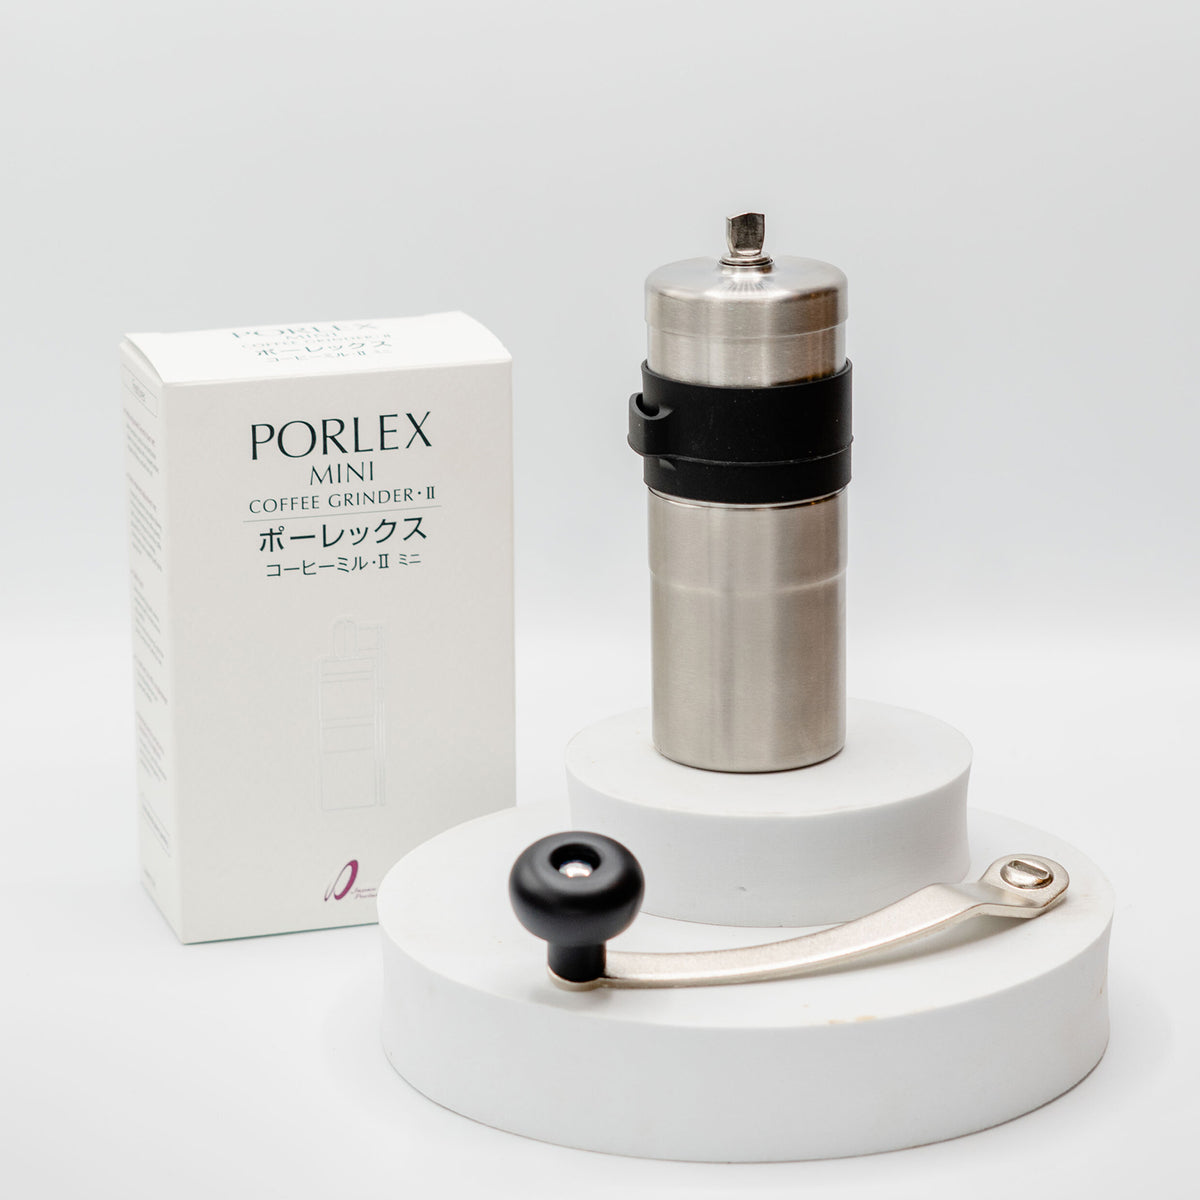 Porlex Mini Coffee Grinder